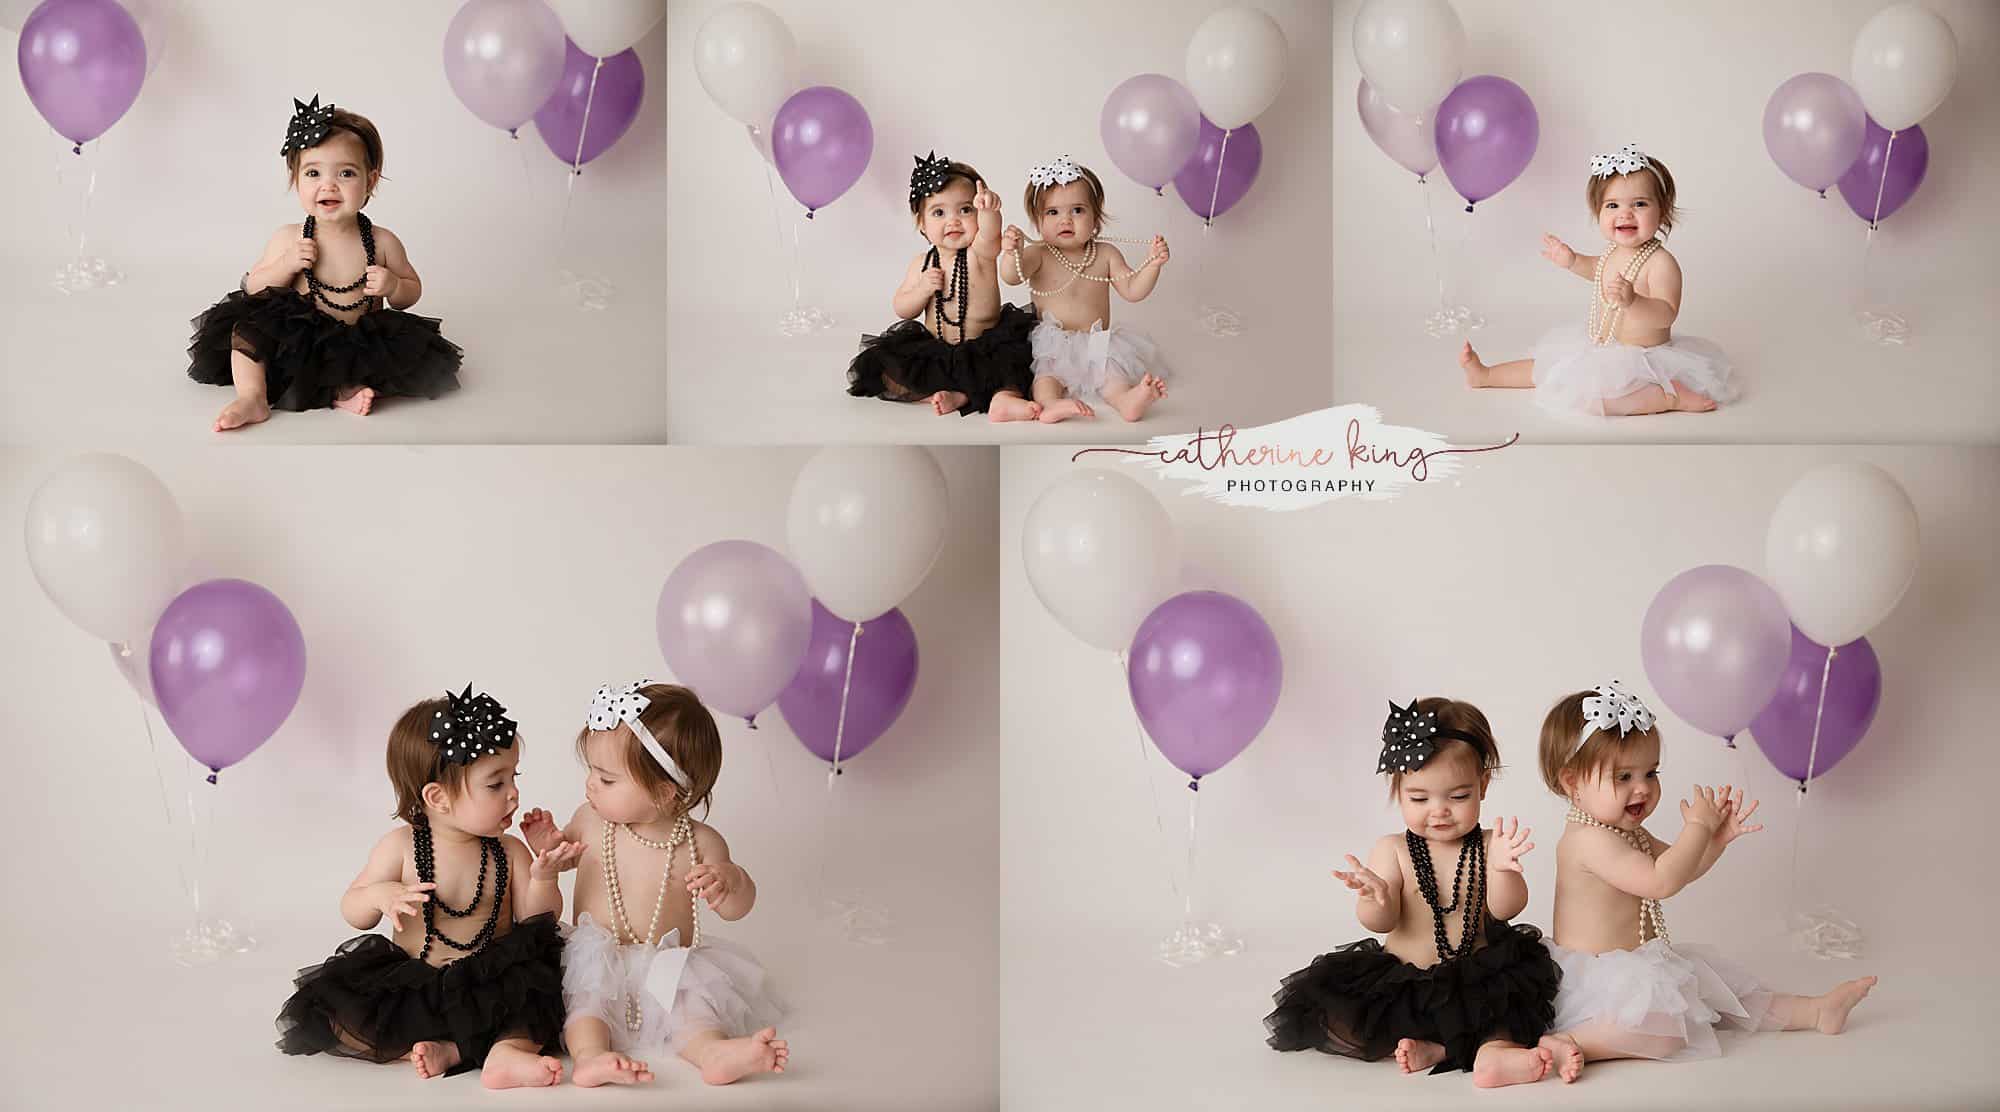 North Haven CT Twin girls 1st birthday photoshoot